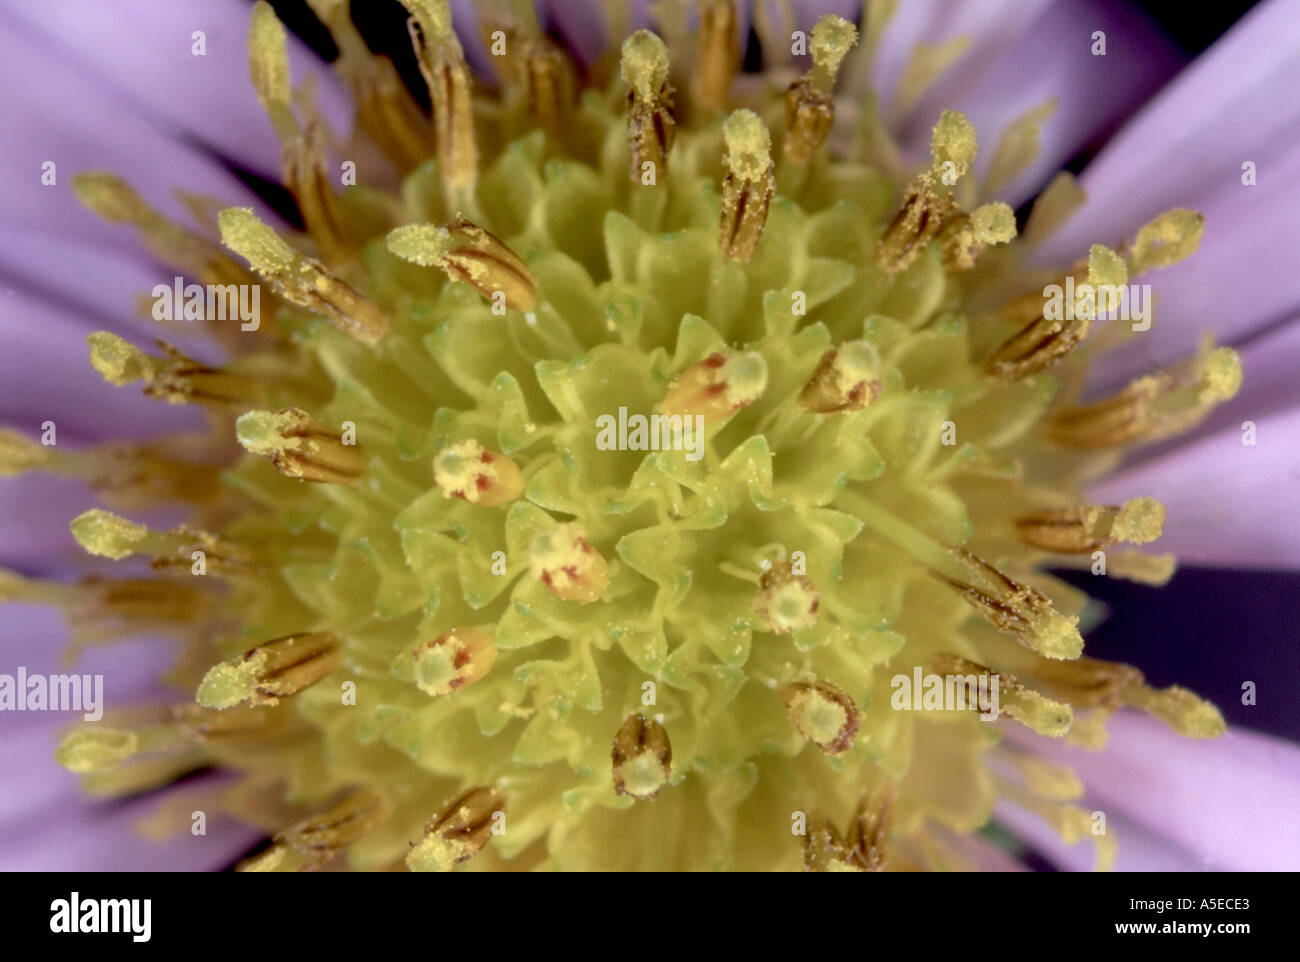 Flower parts of a Michaelmas daisy Aster novi belgii macro detail Stock Photo